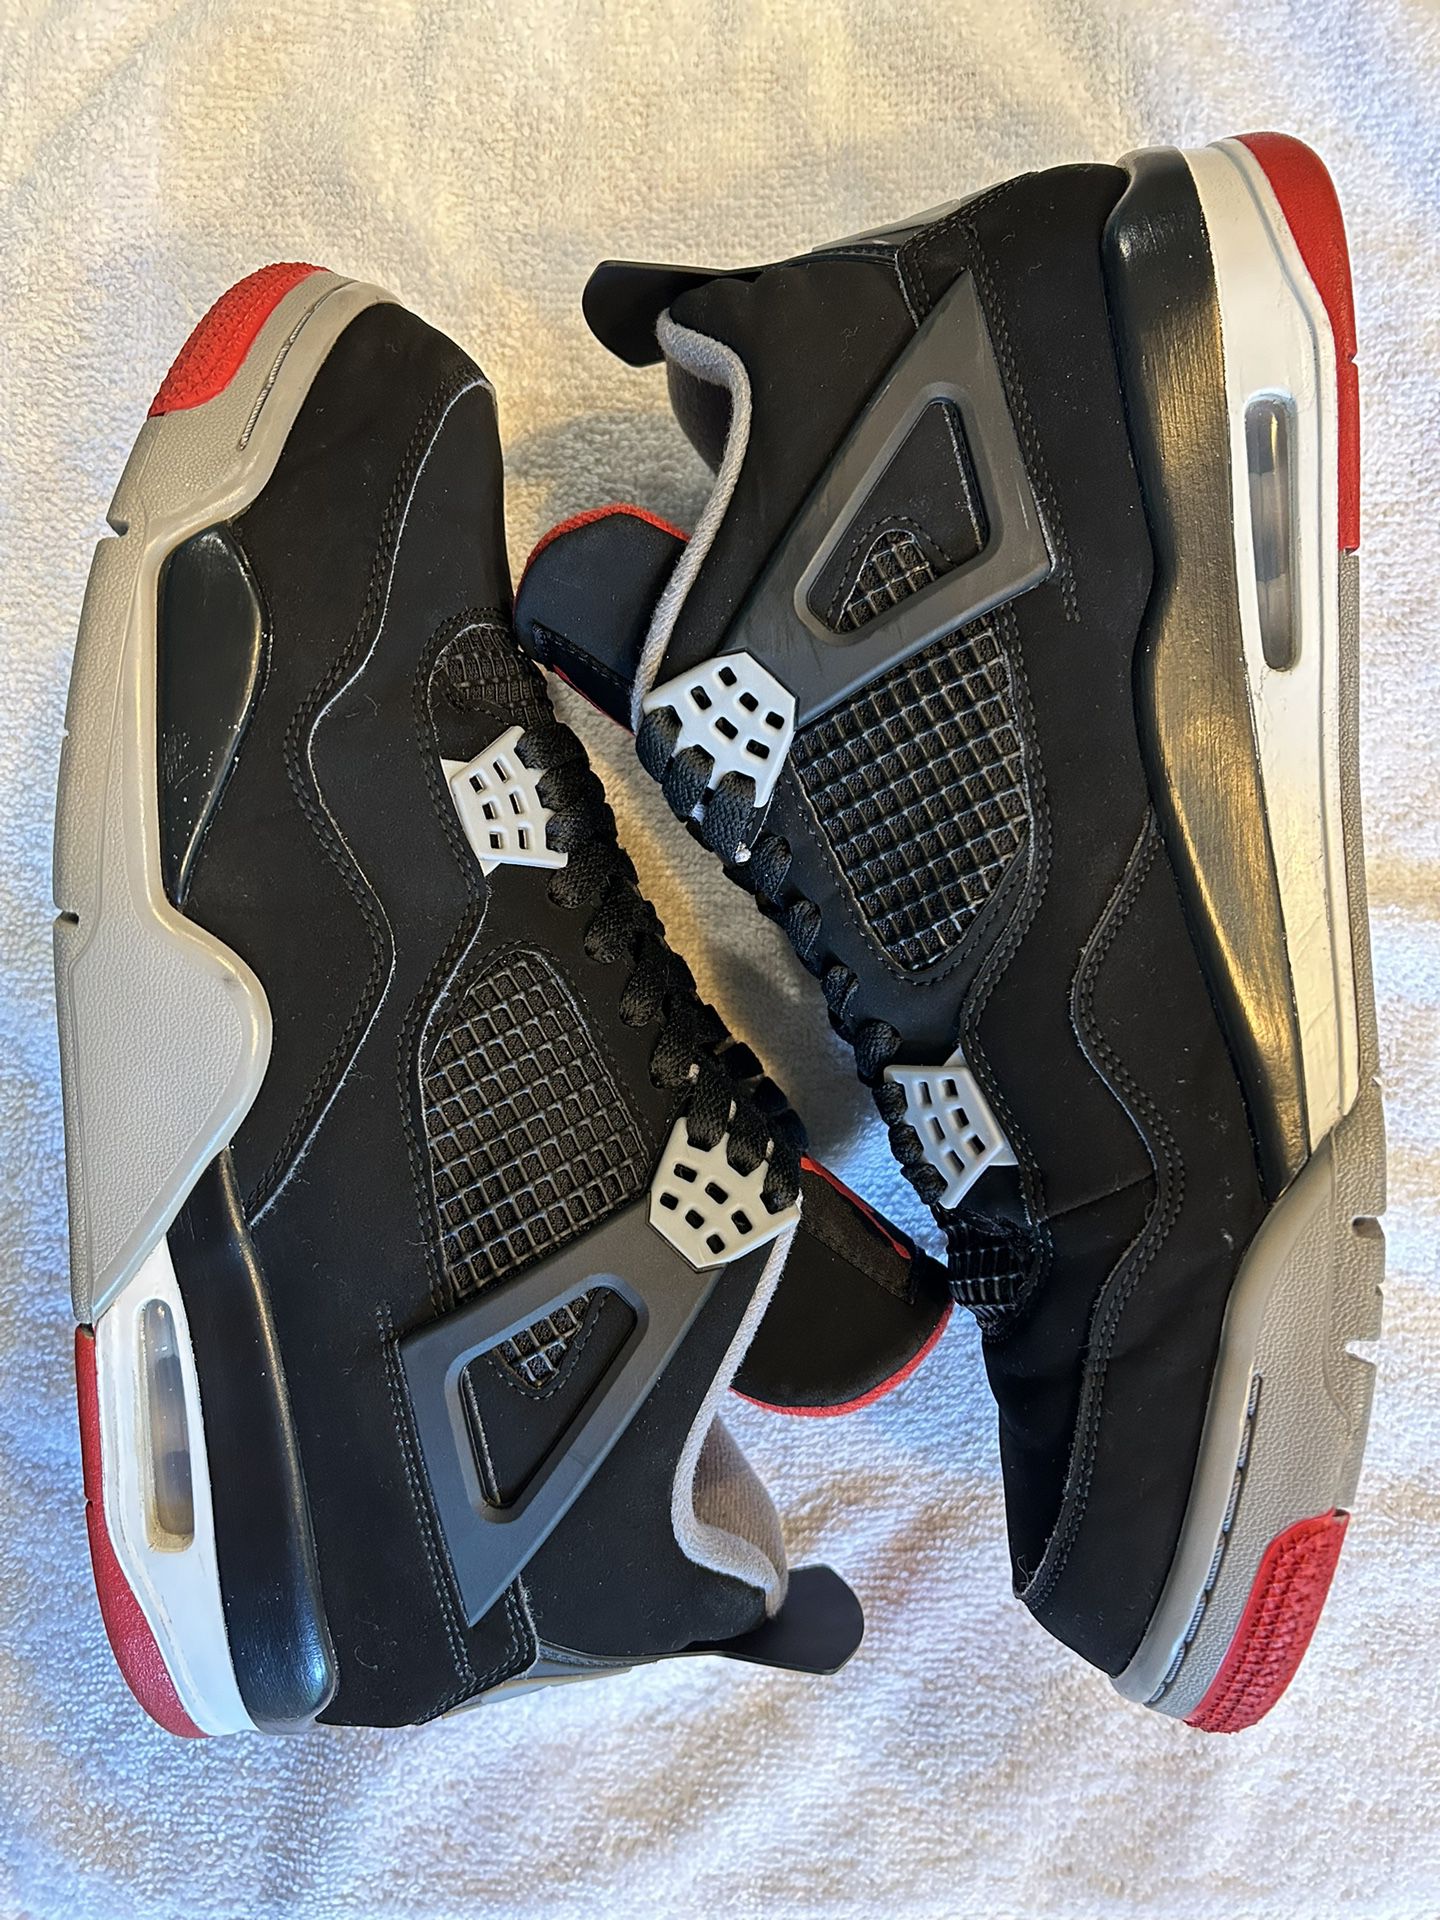 Jordan 4 Bred 2019 Size 11